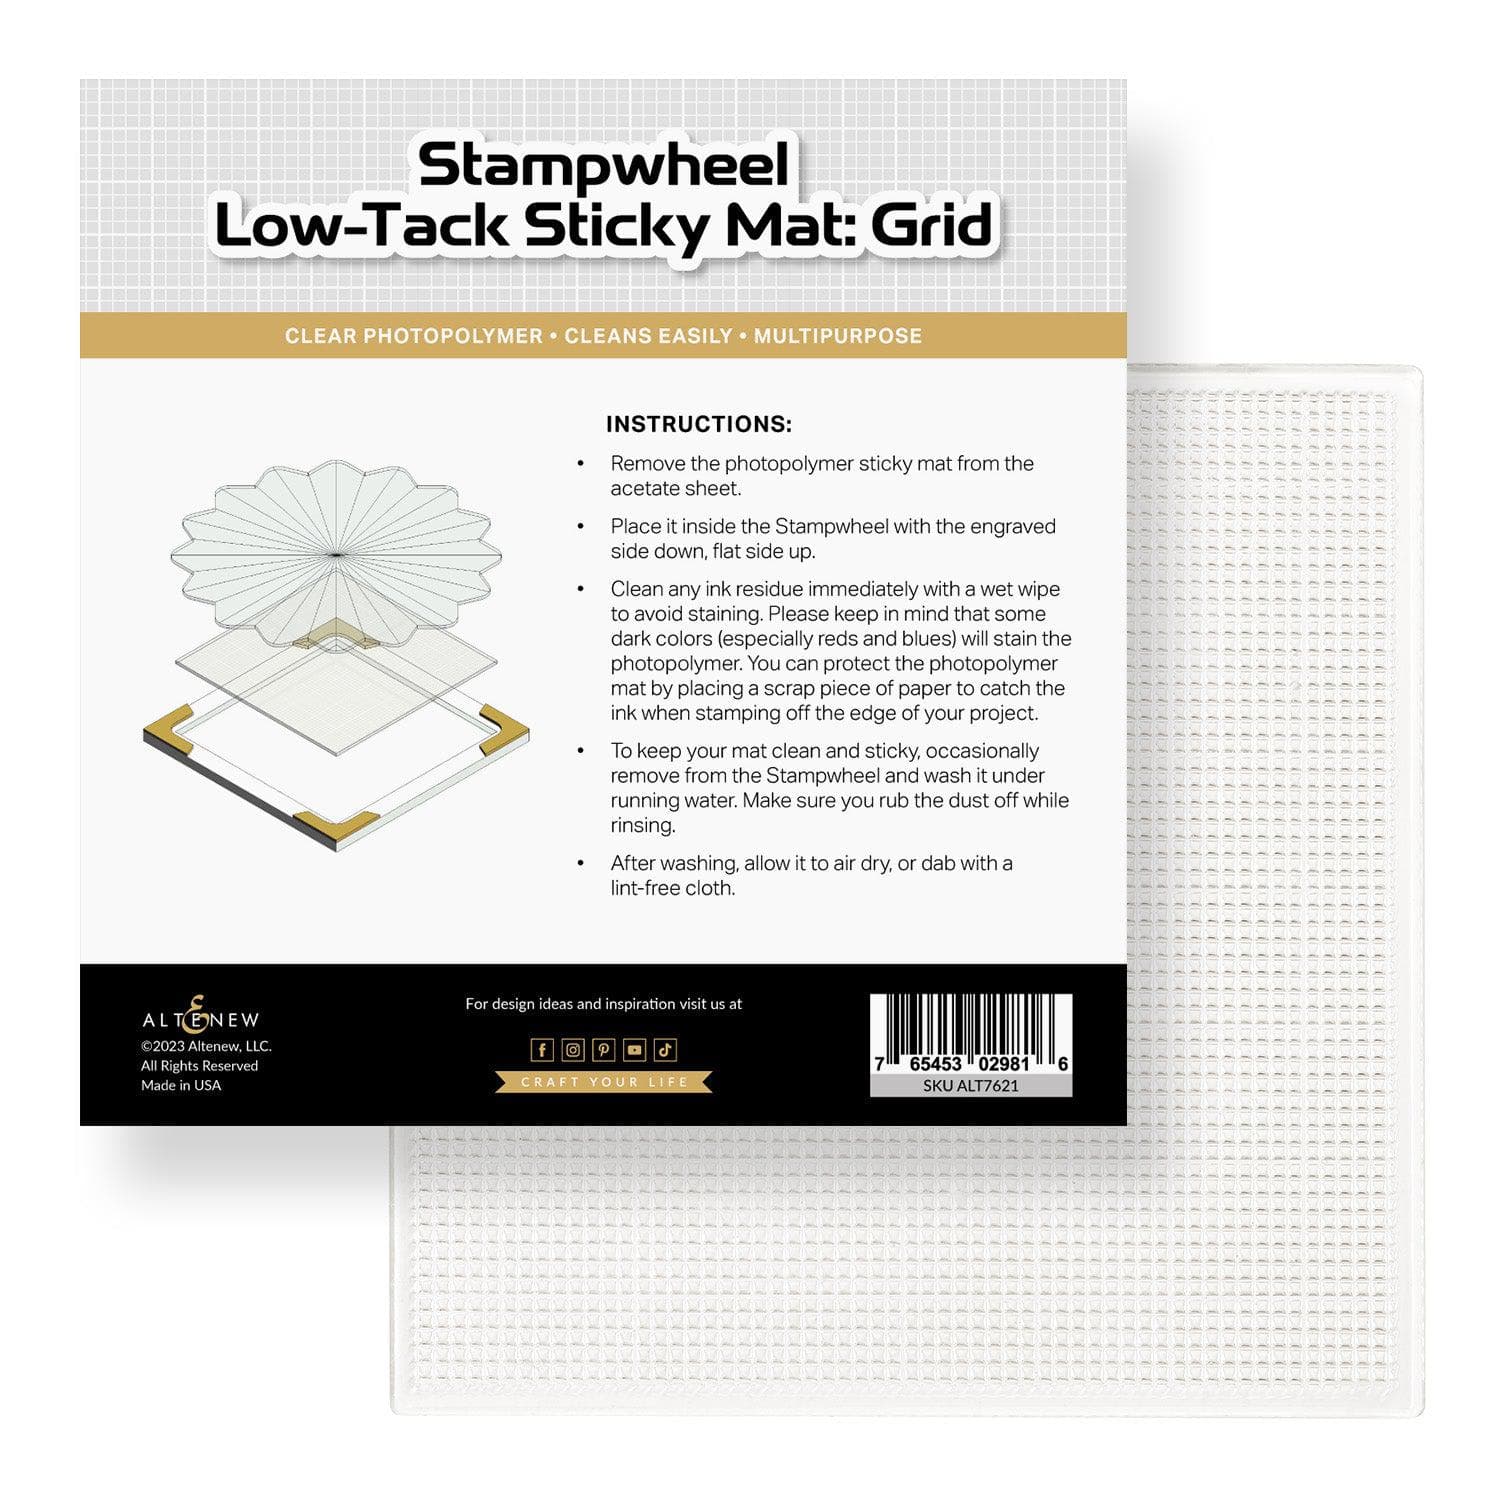 Stampwheel Low-Tack Sticky Mat: Grid